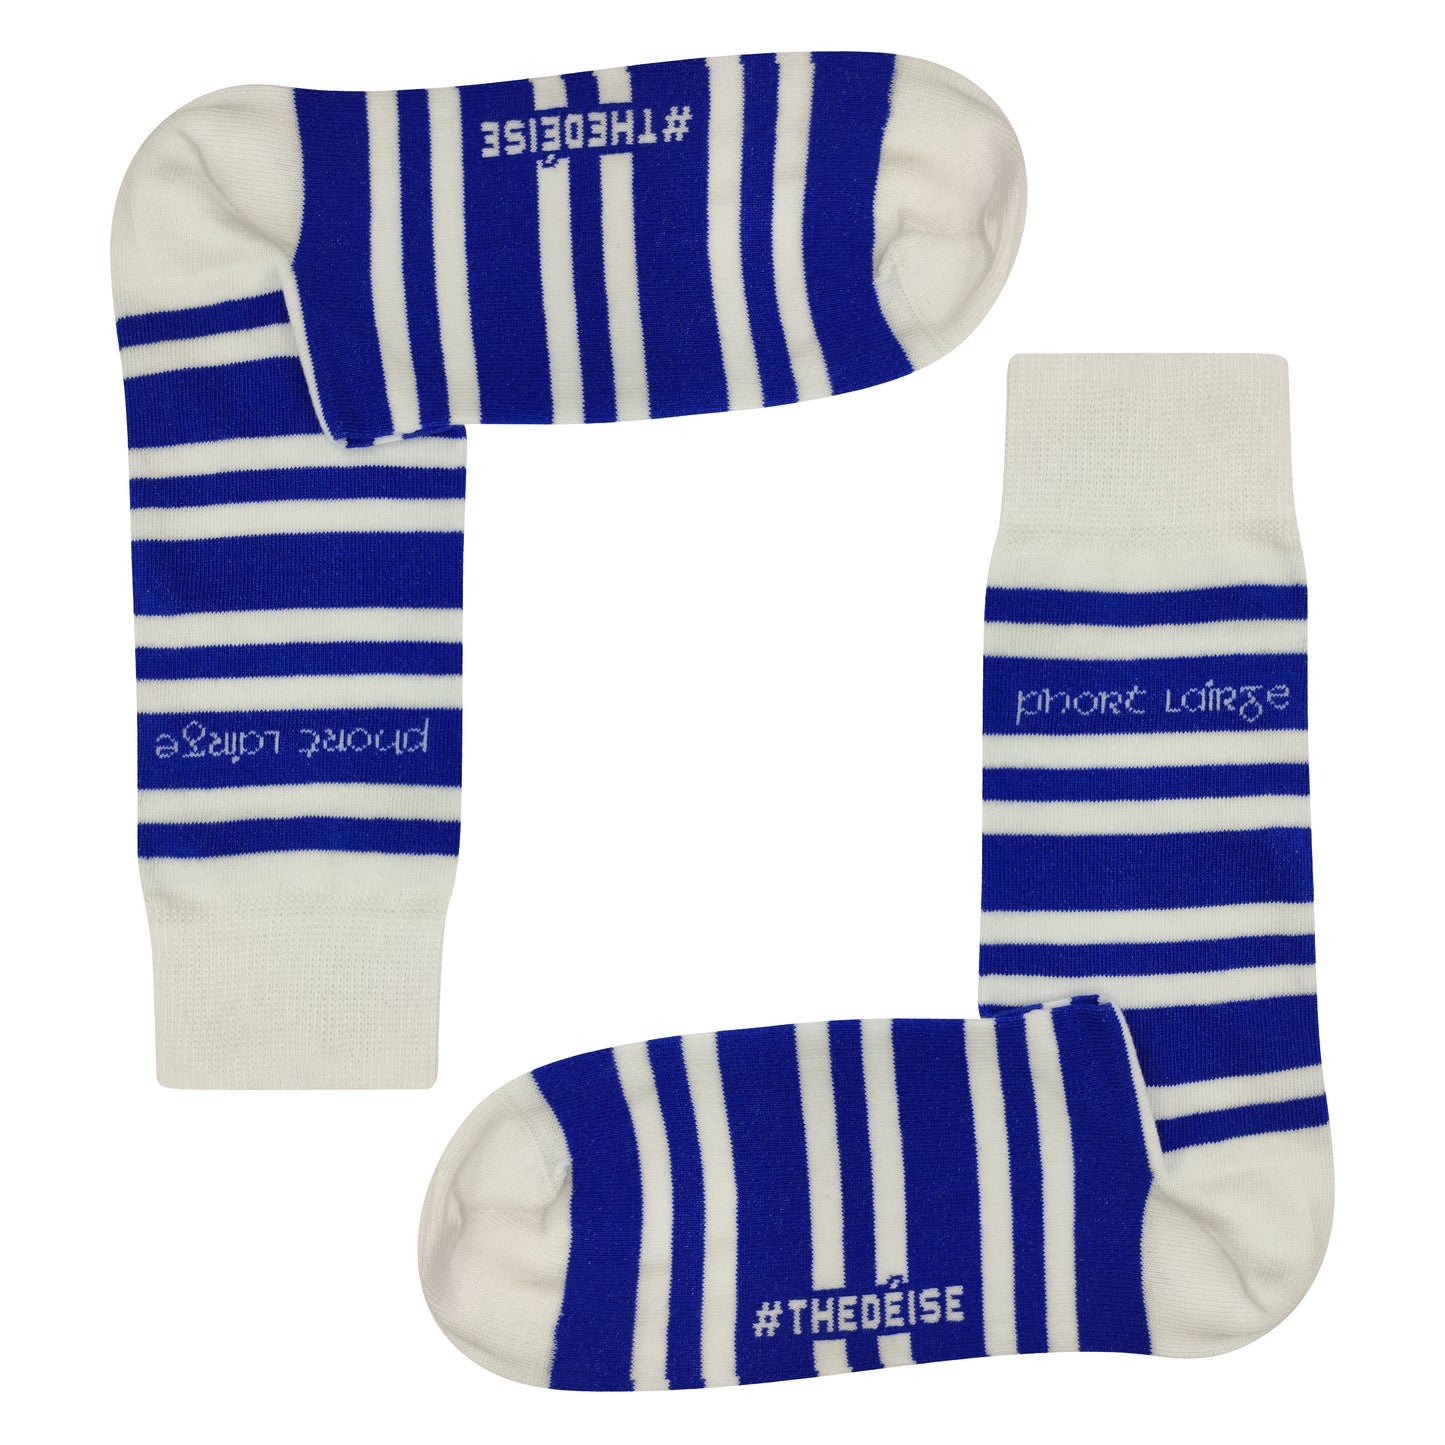 Waterford Retro Sock Gift Box | Signed By Stephen Bennett | Size UK 7 - 11